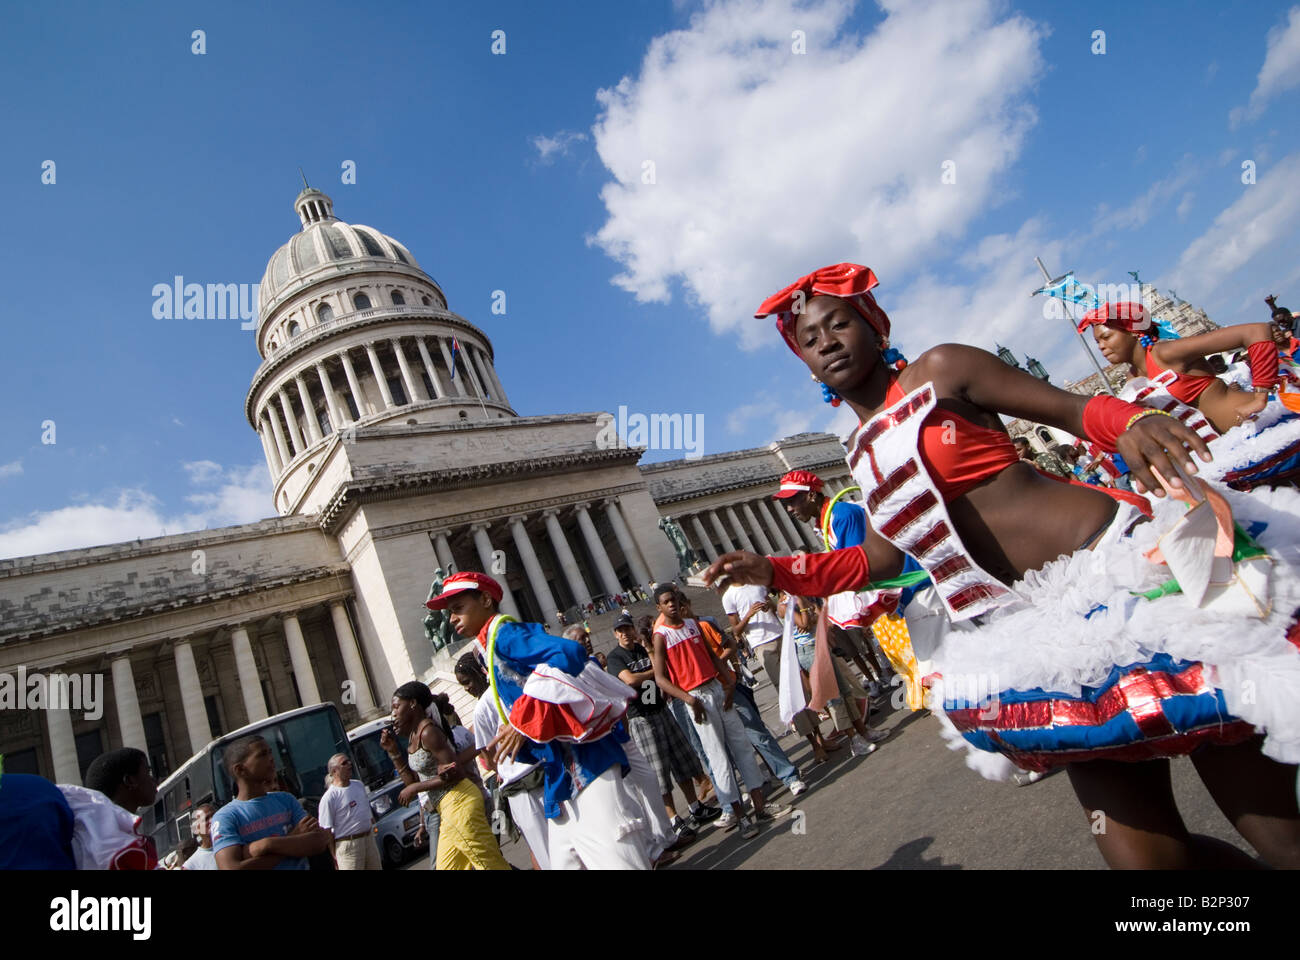 Afrocuban carnival group Los componedores de batea performing in front of the Capitolio in La Habana Vieja Havana Cuba Stock Photo